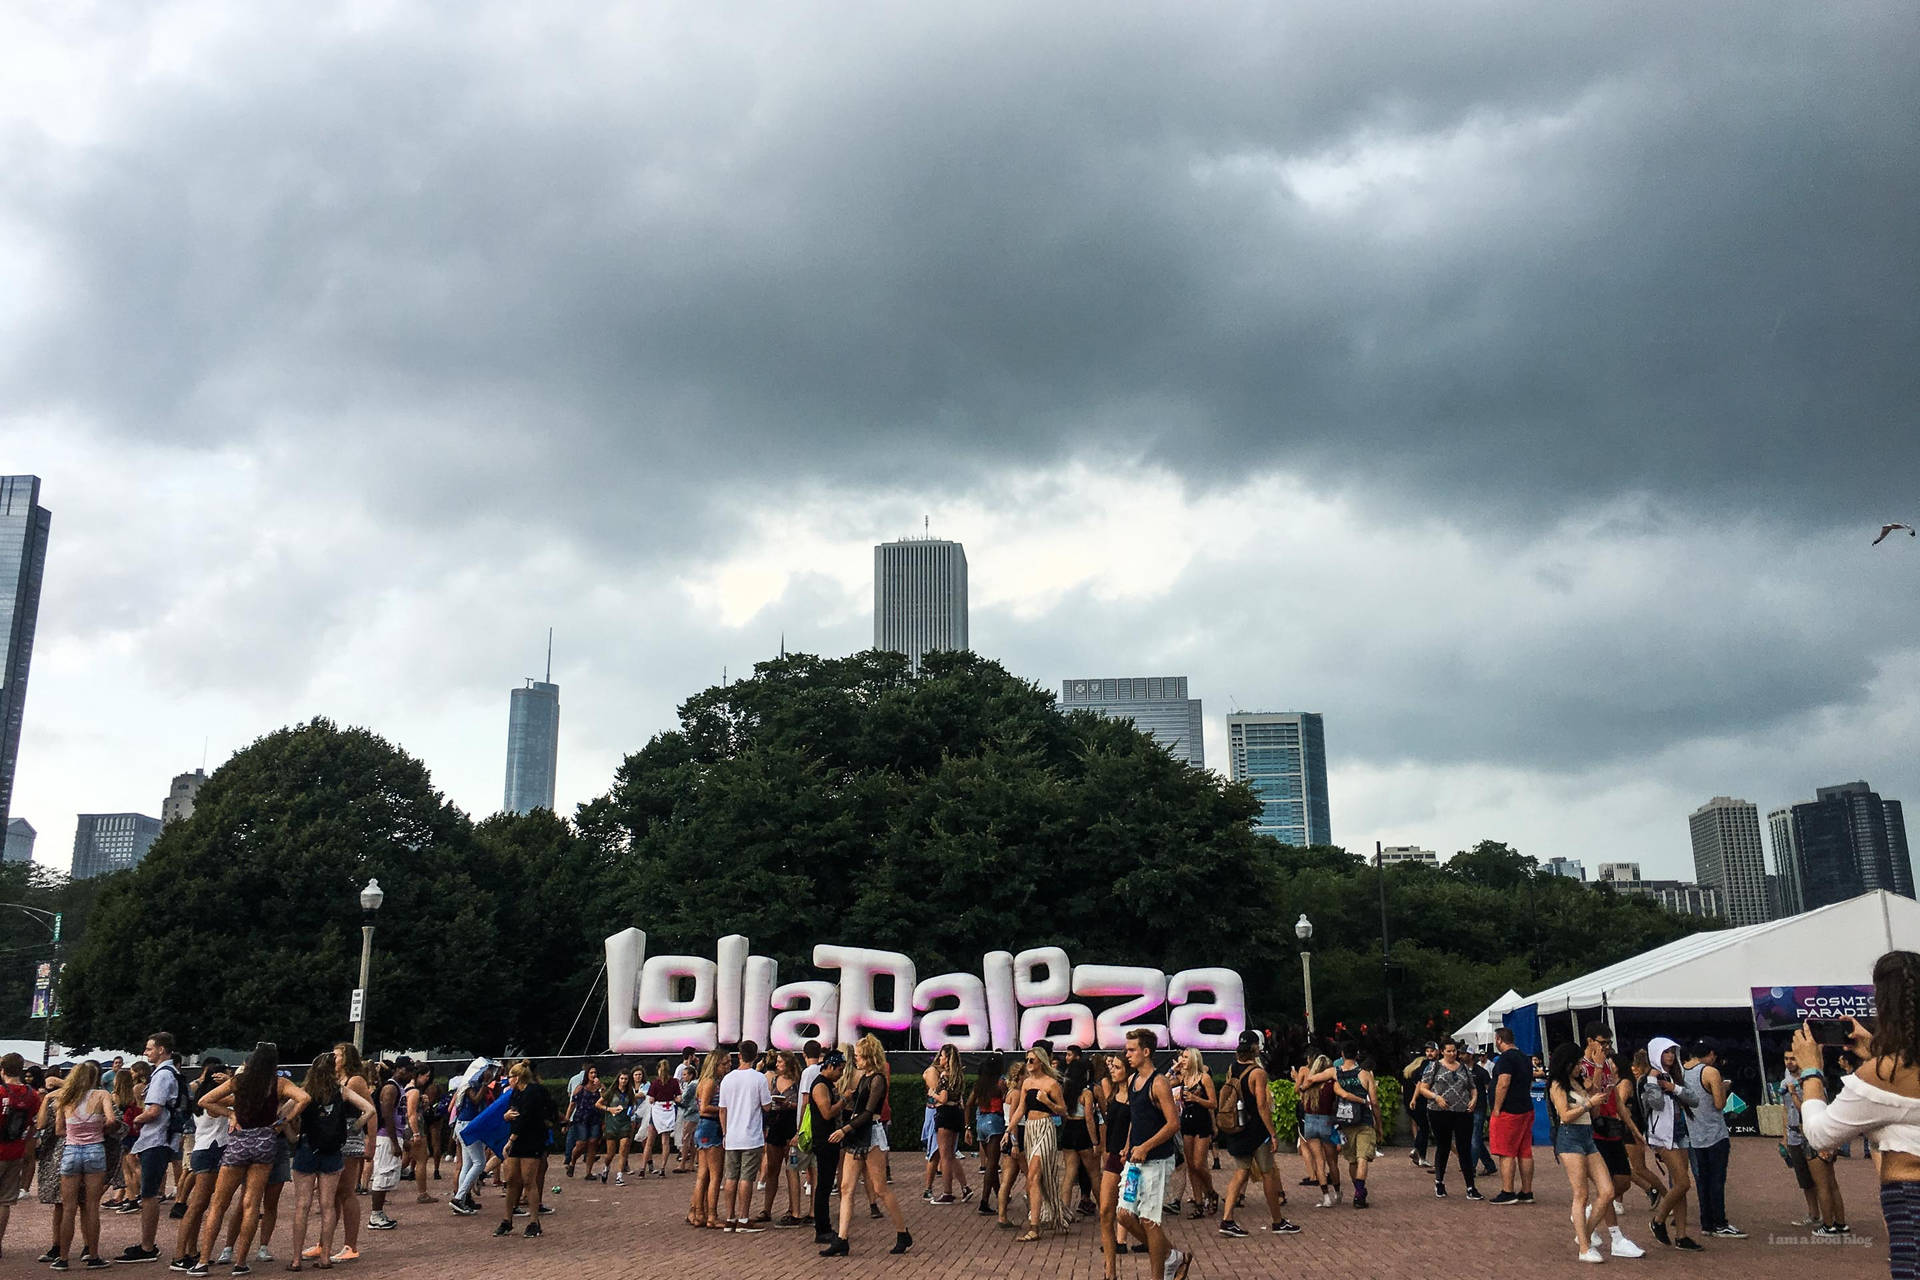 Lollapalooza Cloudy Sky